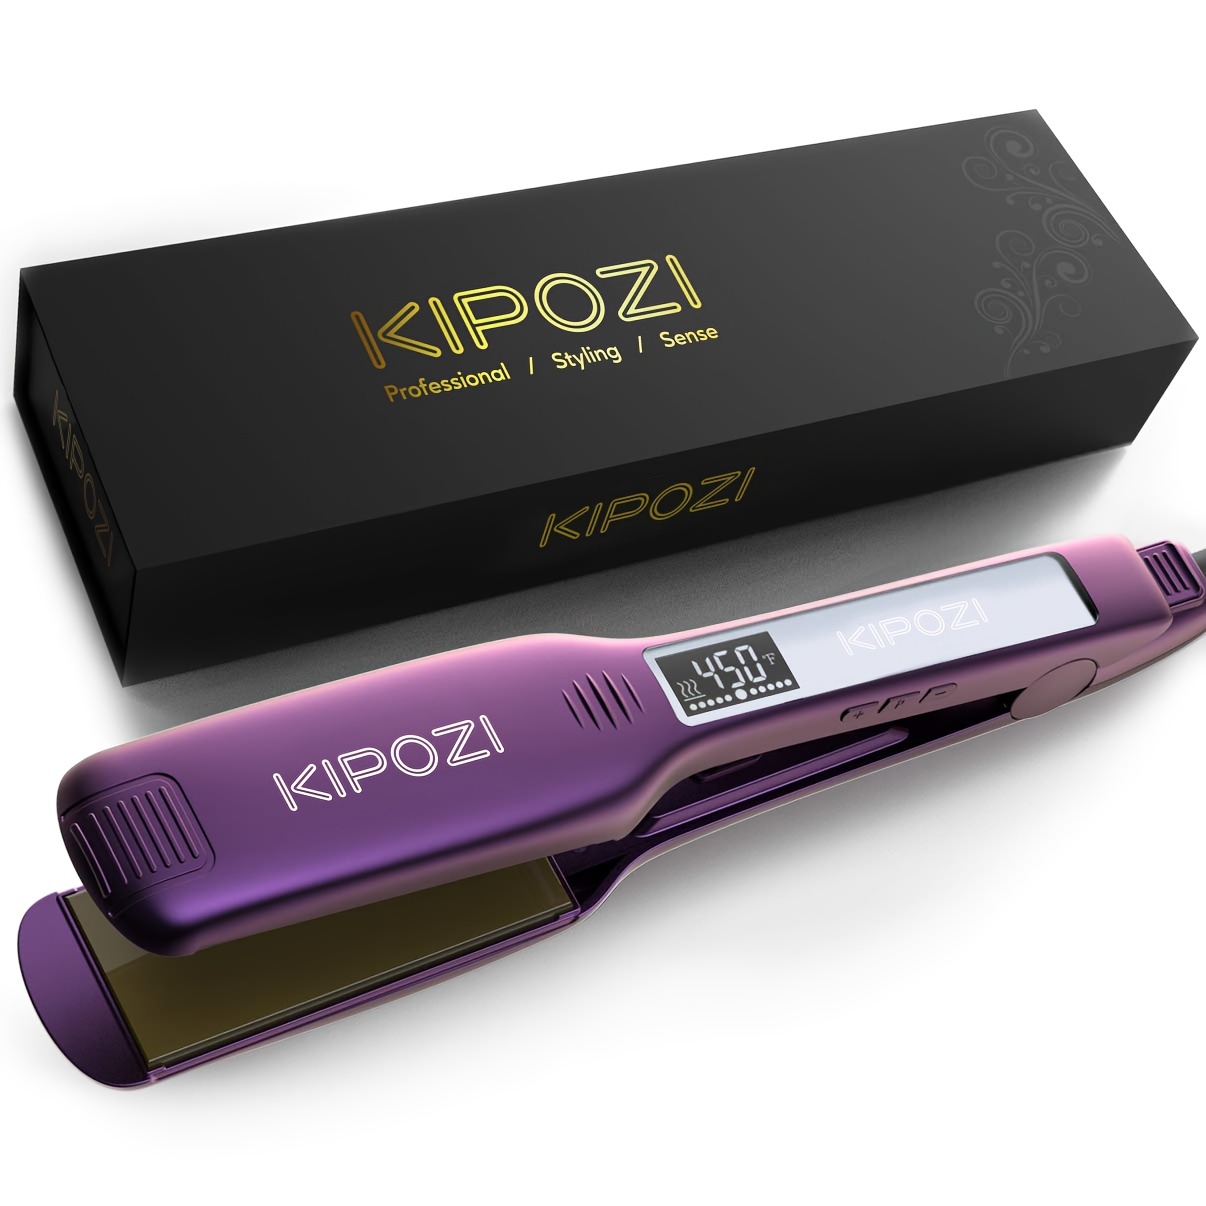 

Kipozi Negative Ion Flat Iron, Anti-static Hair Straightener With 1.75 Inch Floating Titanium Wide Plates